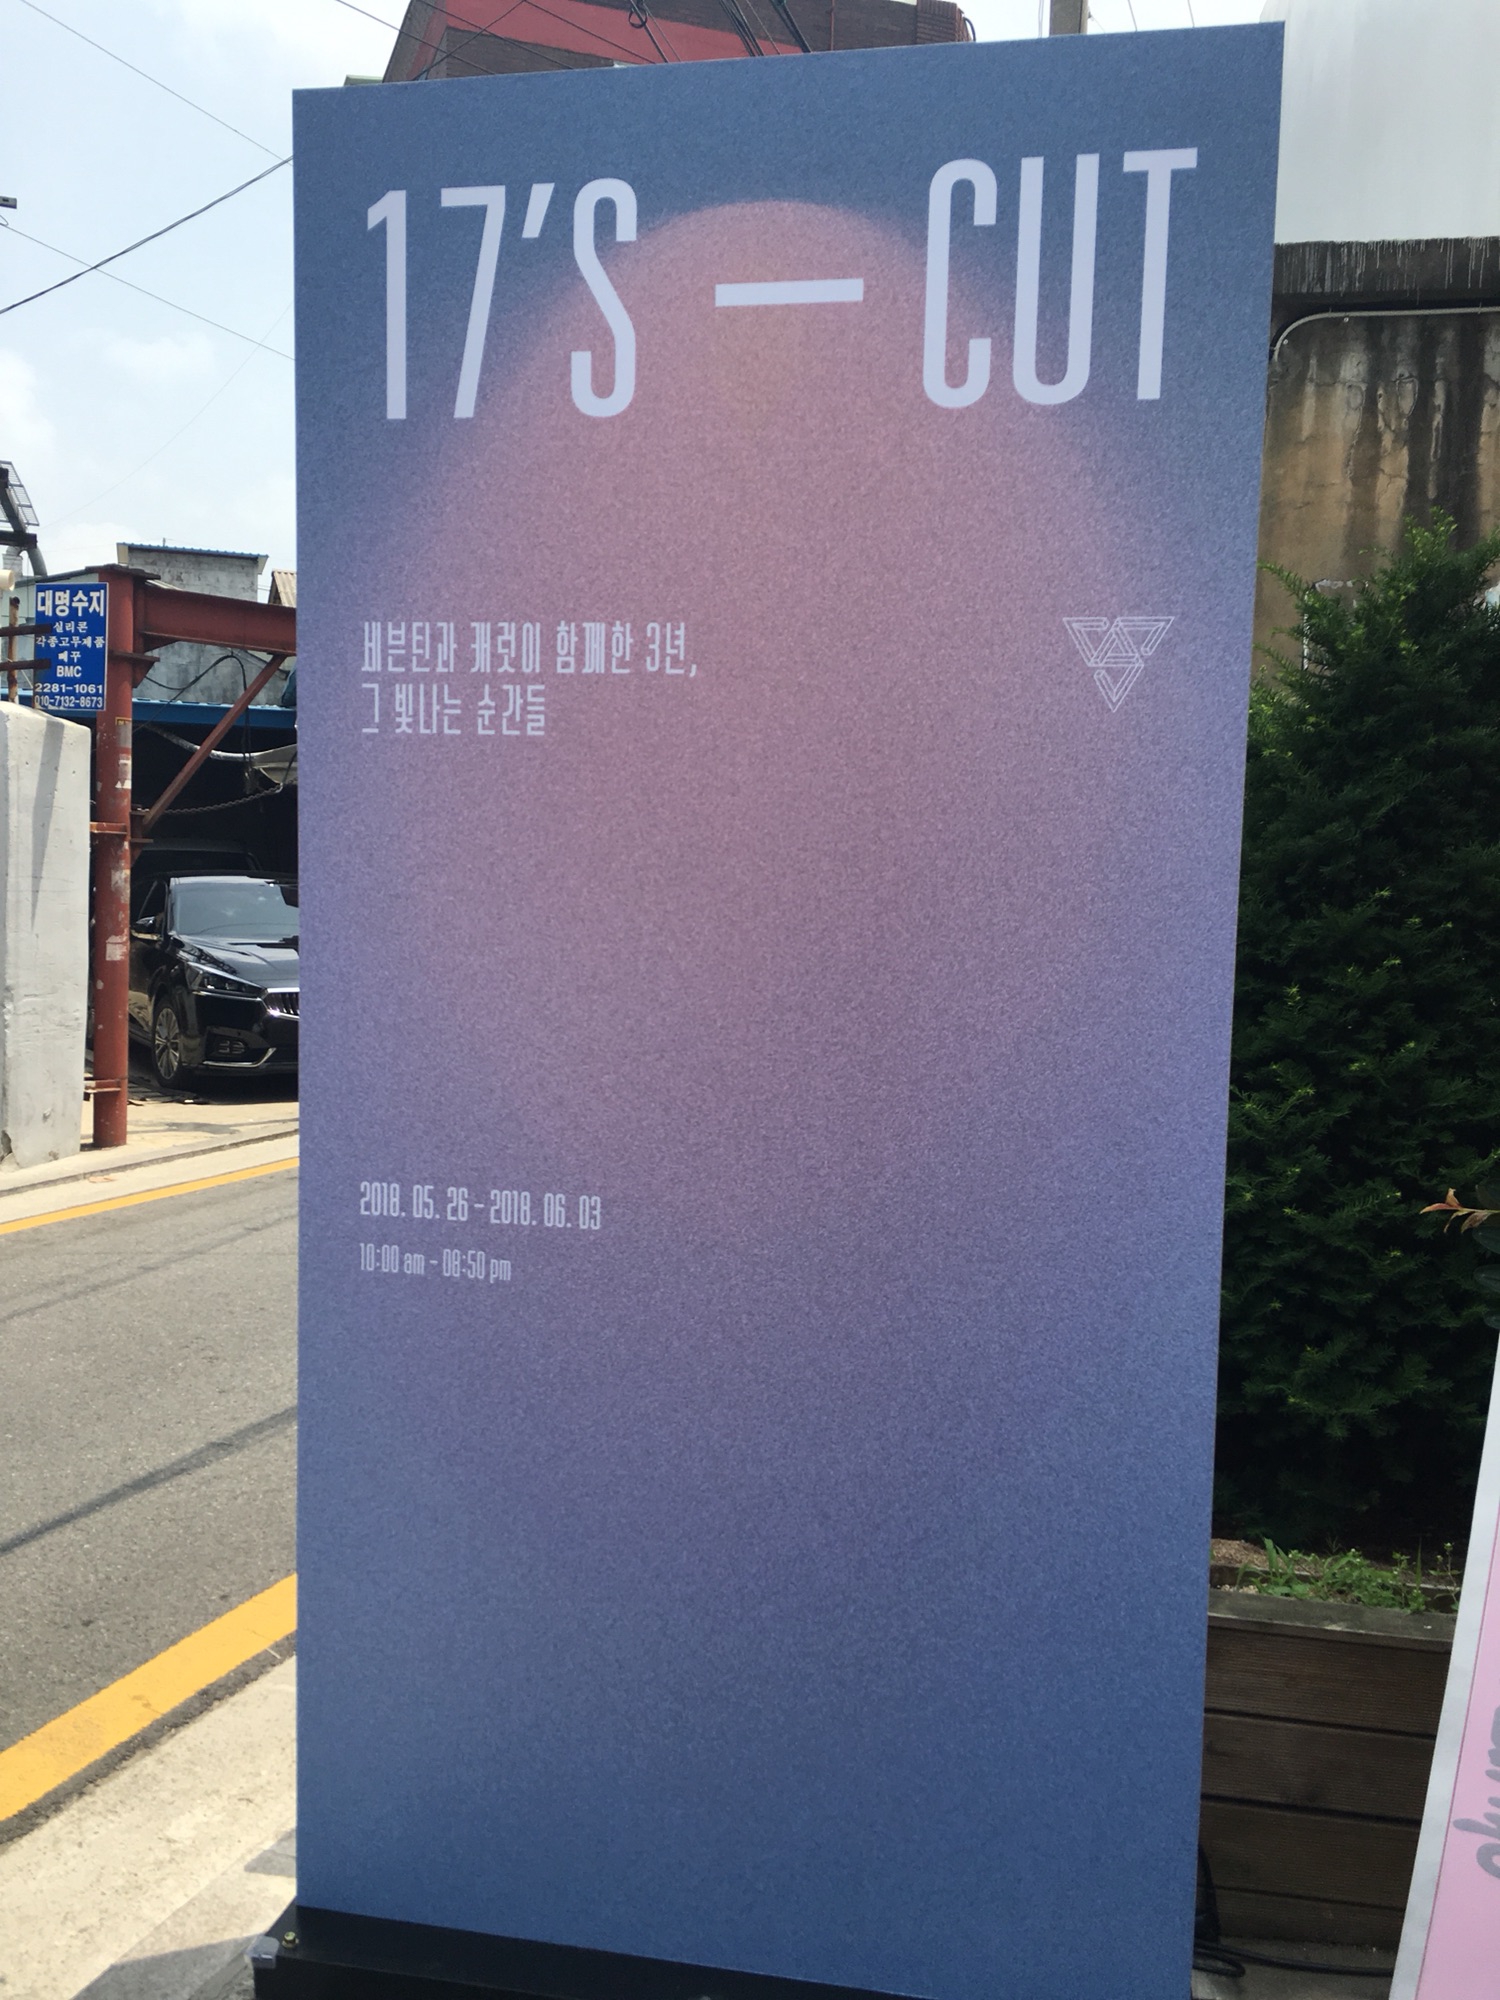 17'S- CUT（SEVENTEEN展示会） | GOO！KOREA